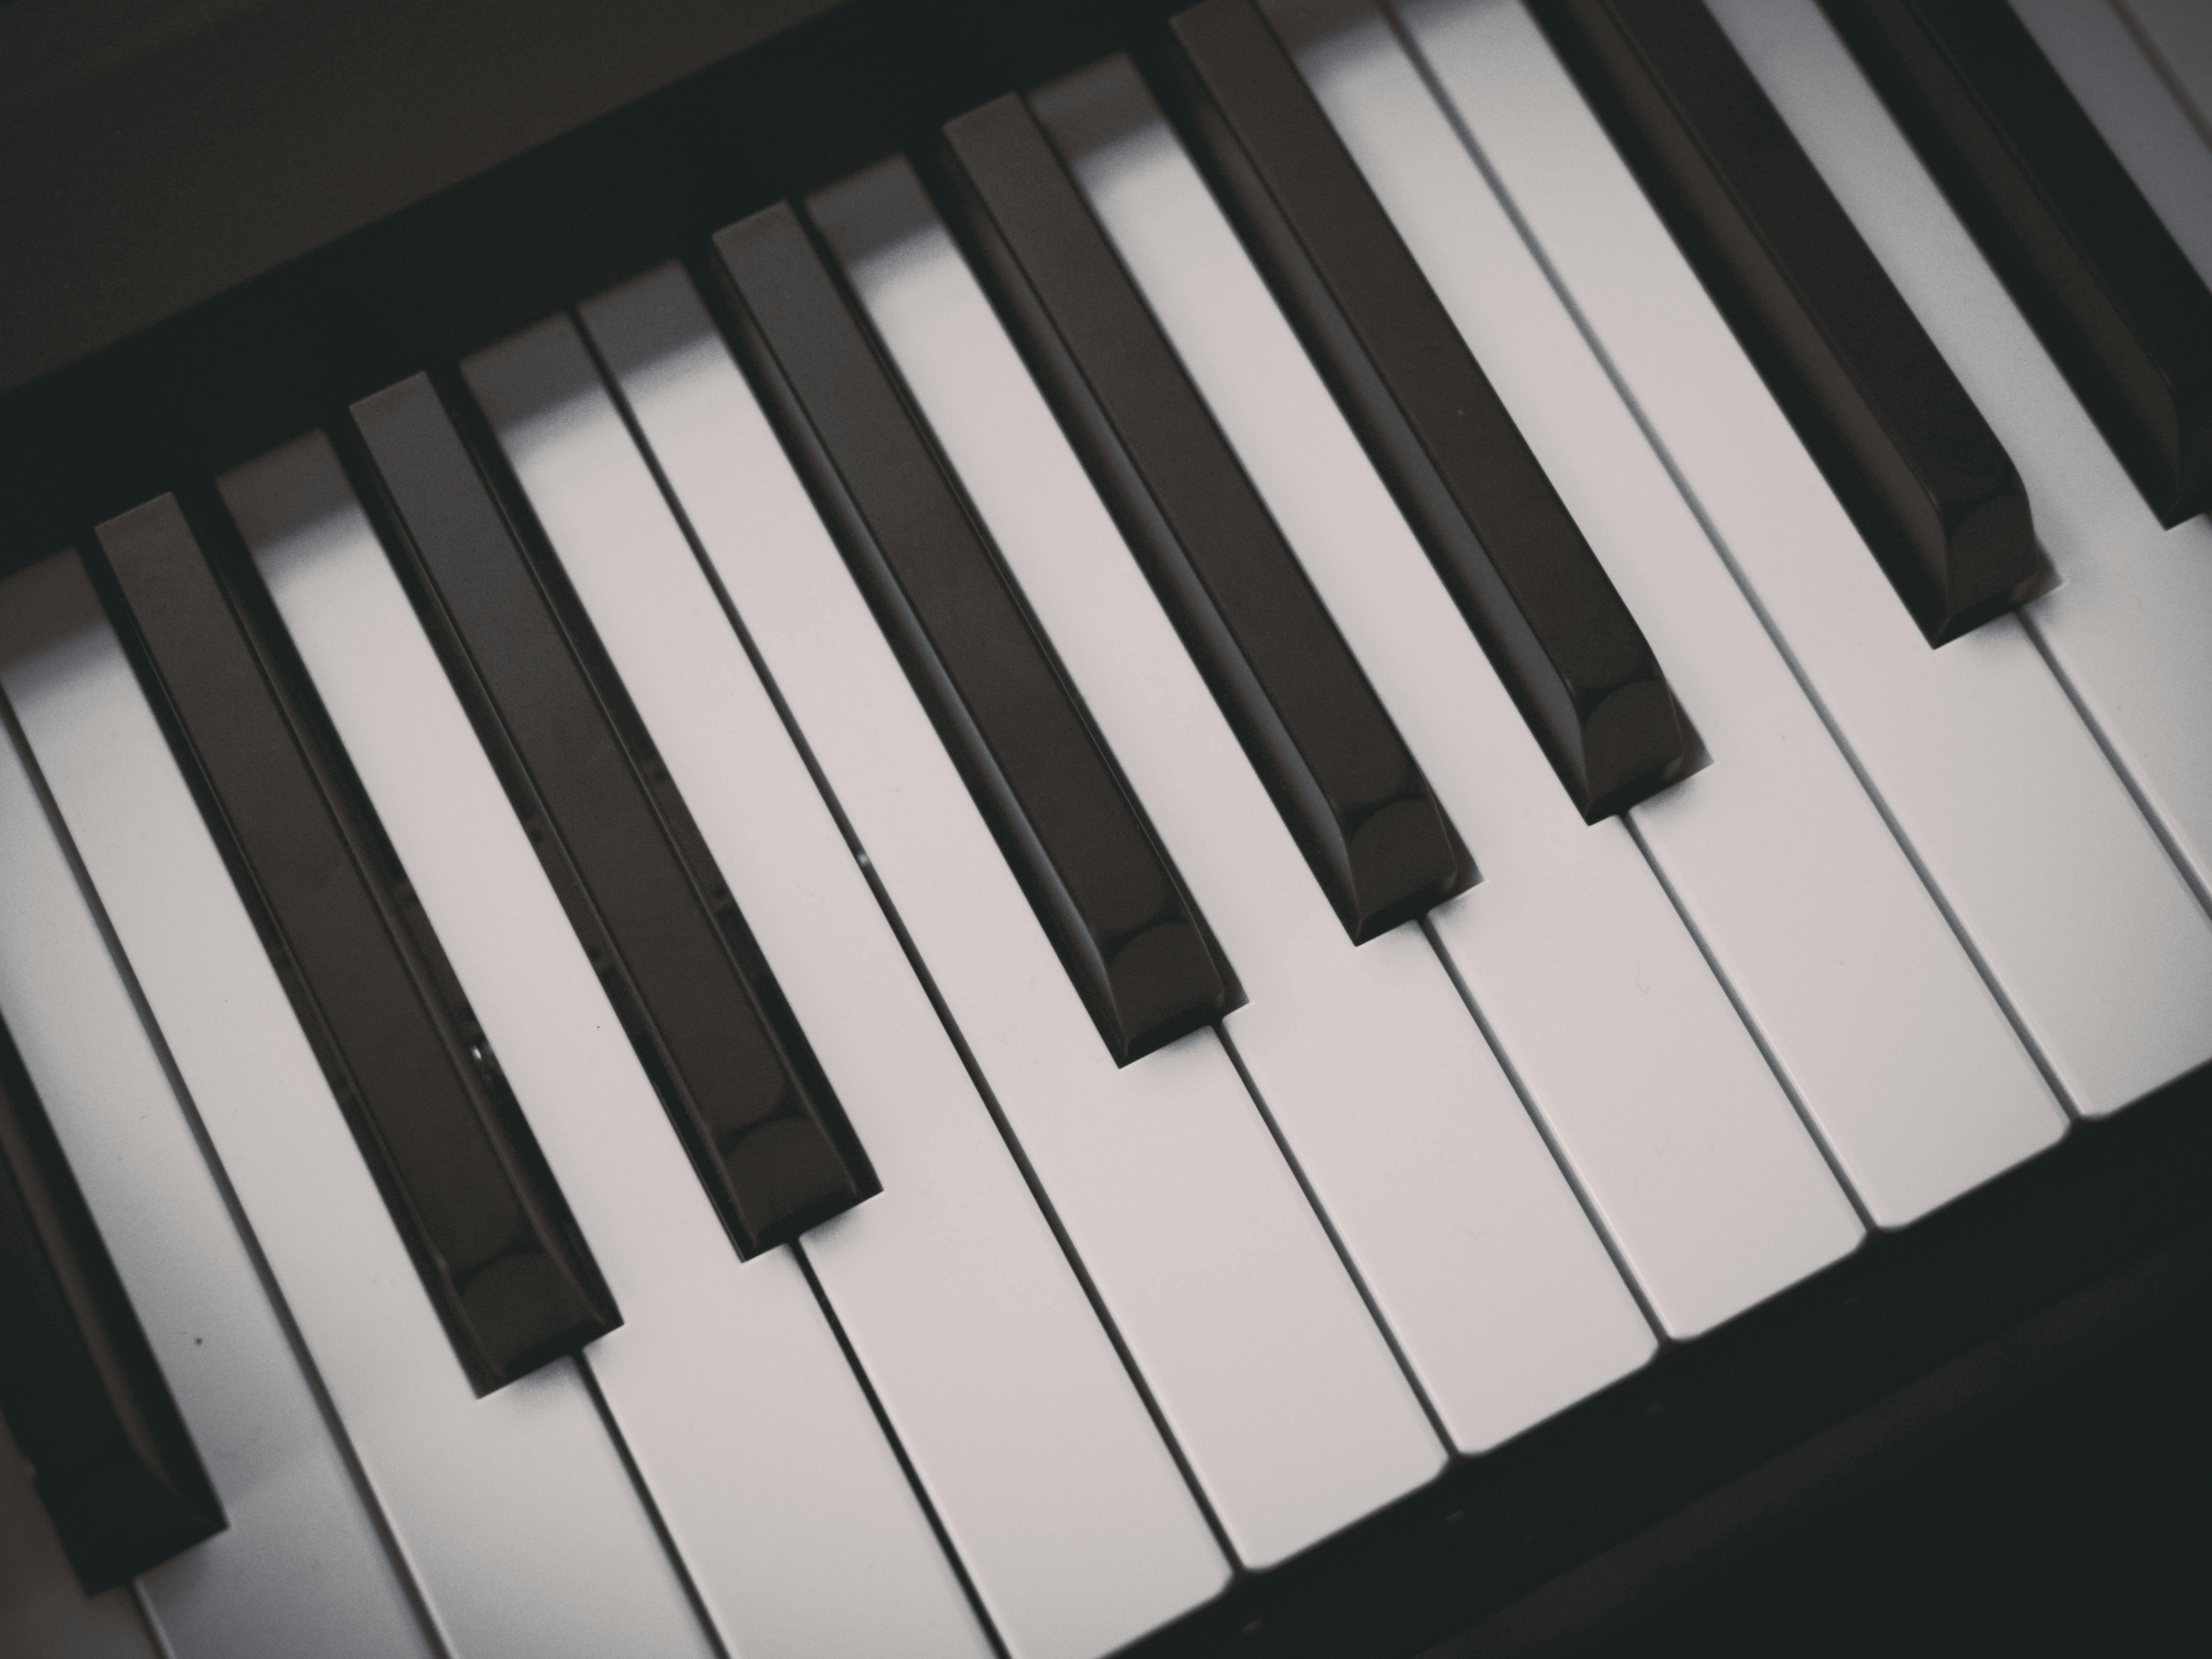 piano keyboards